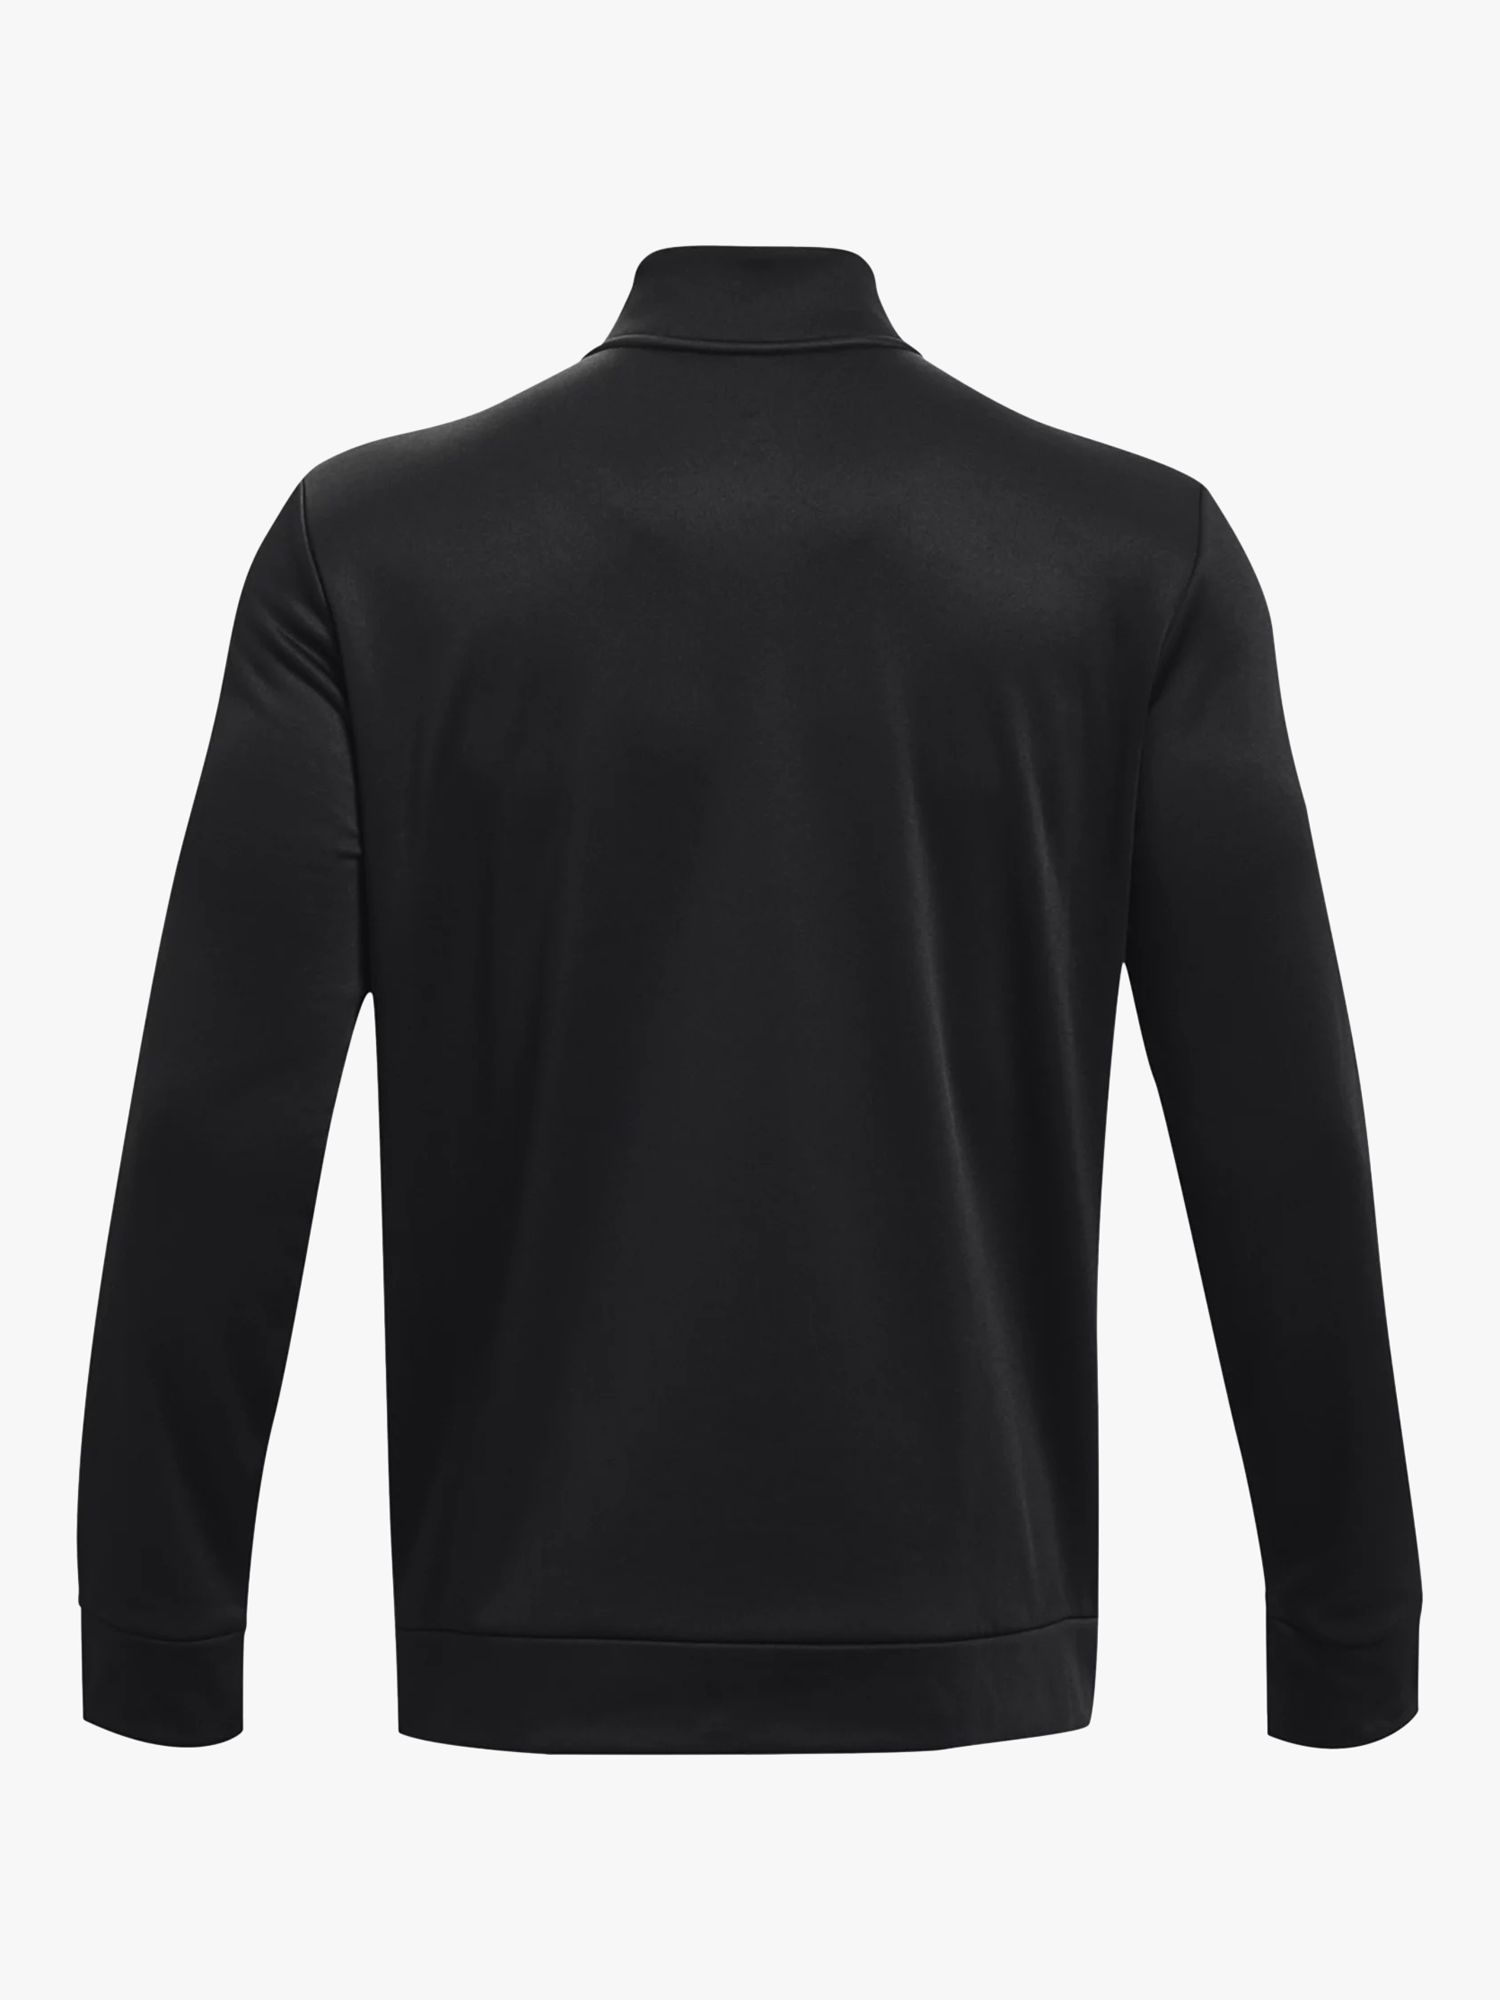 Under Armour Armour Fleece® 1/2 Zip Long Sleeve Gym Top, Black, S